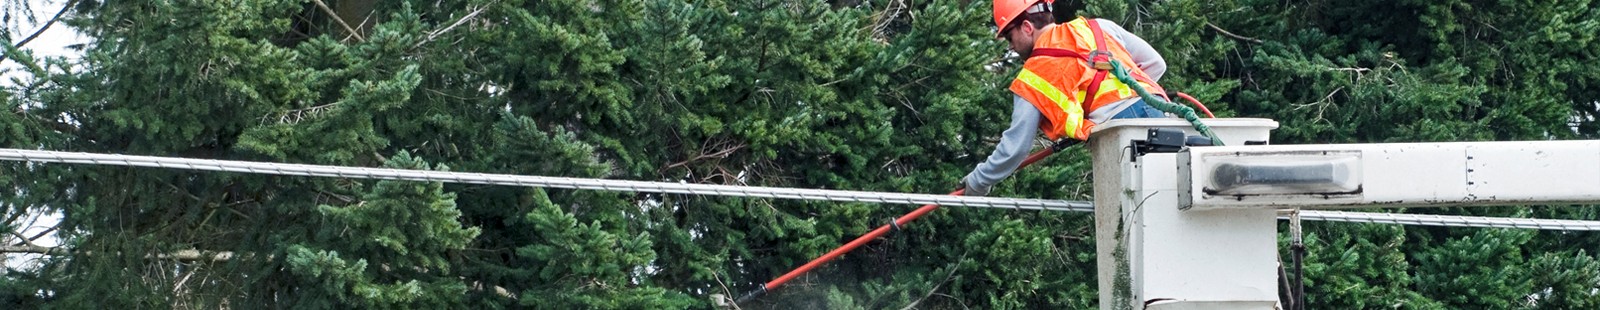 Lineman cutting down trees